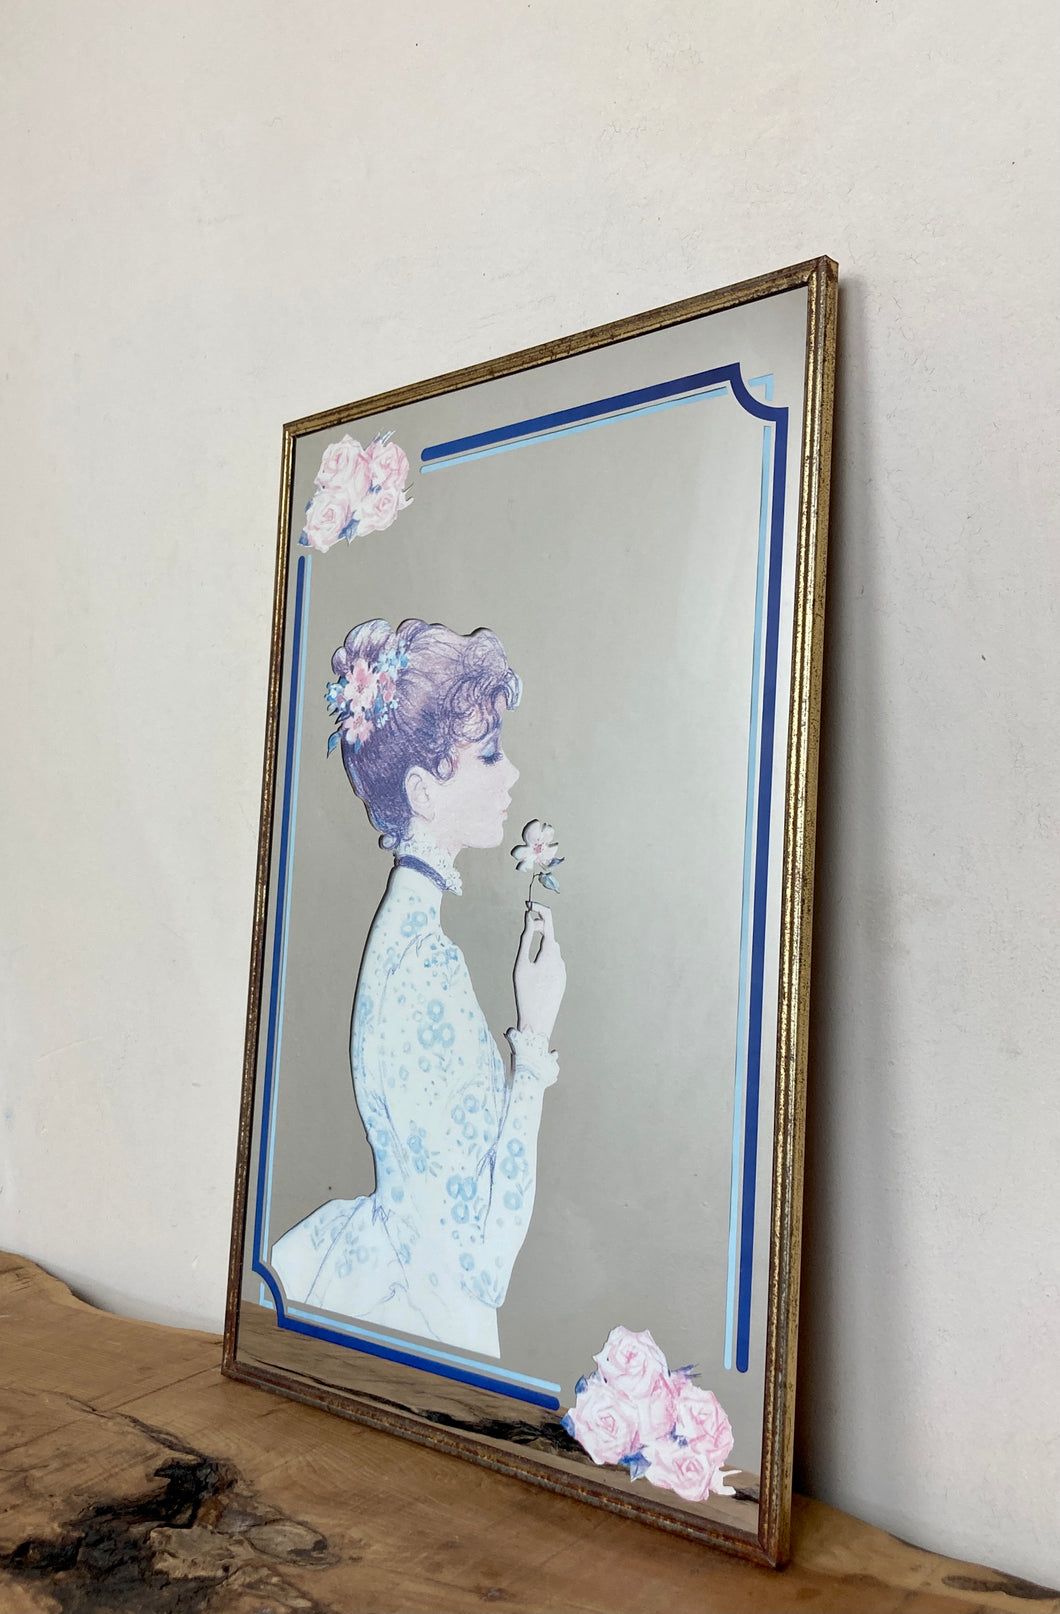 Stylish vintage art nouveau lady flapper mirror collectibles wall art piece